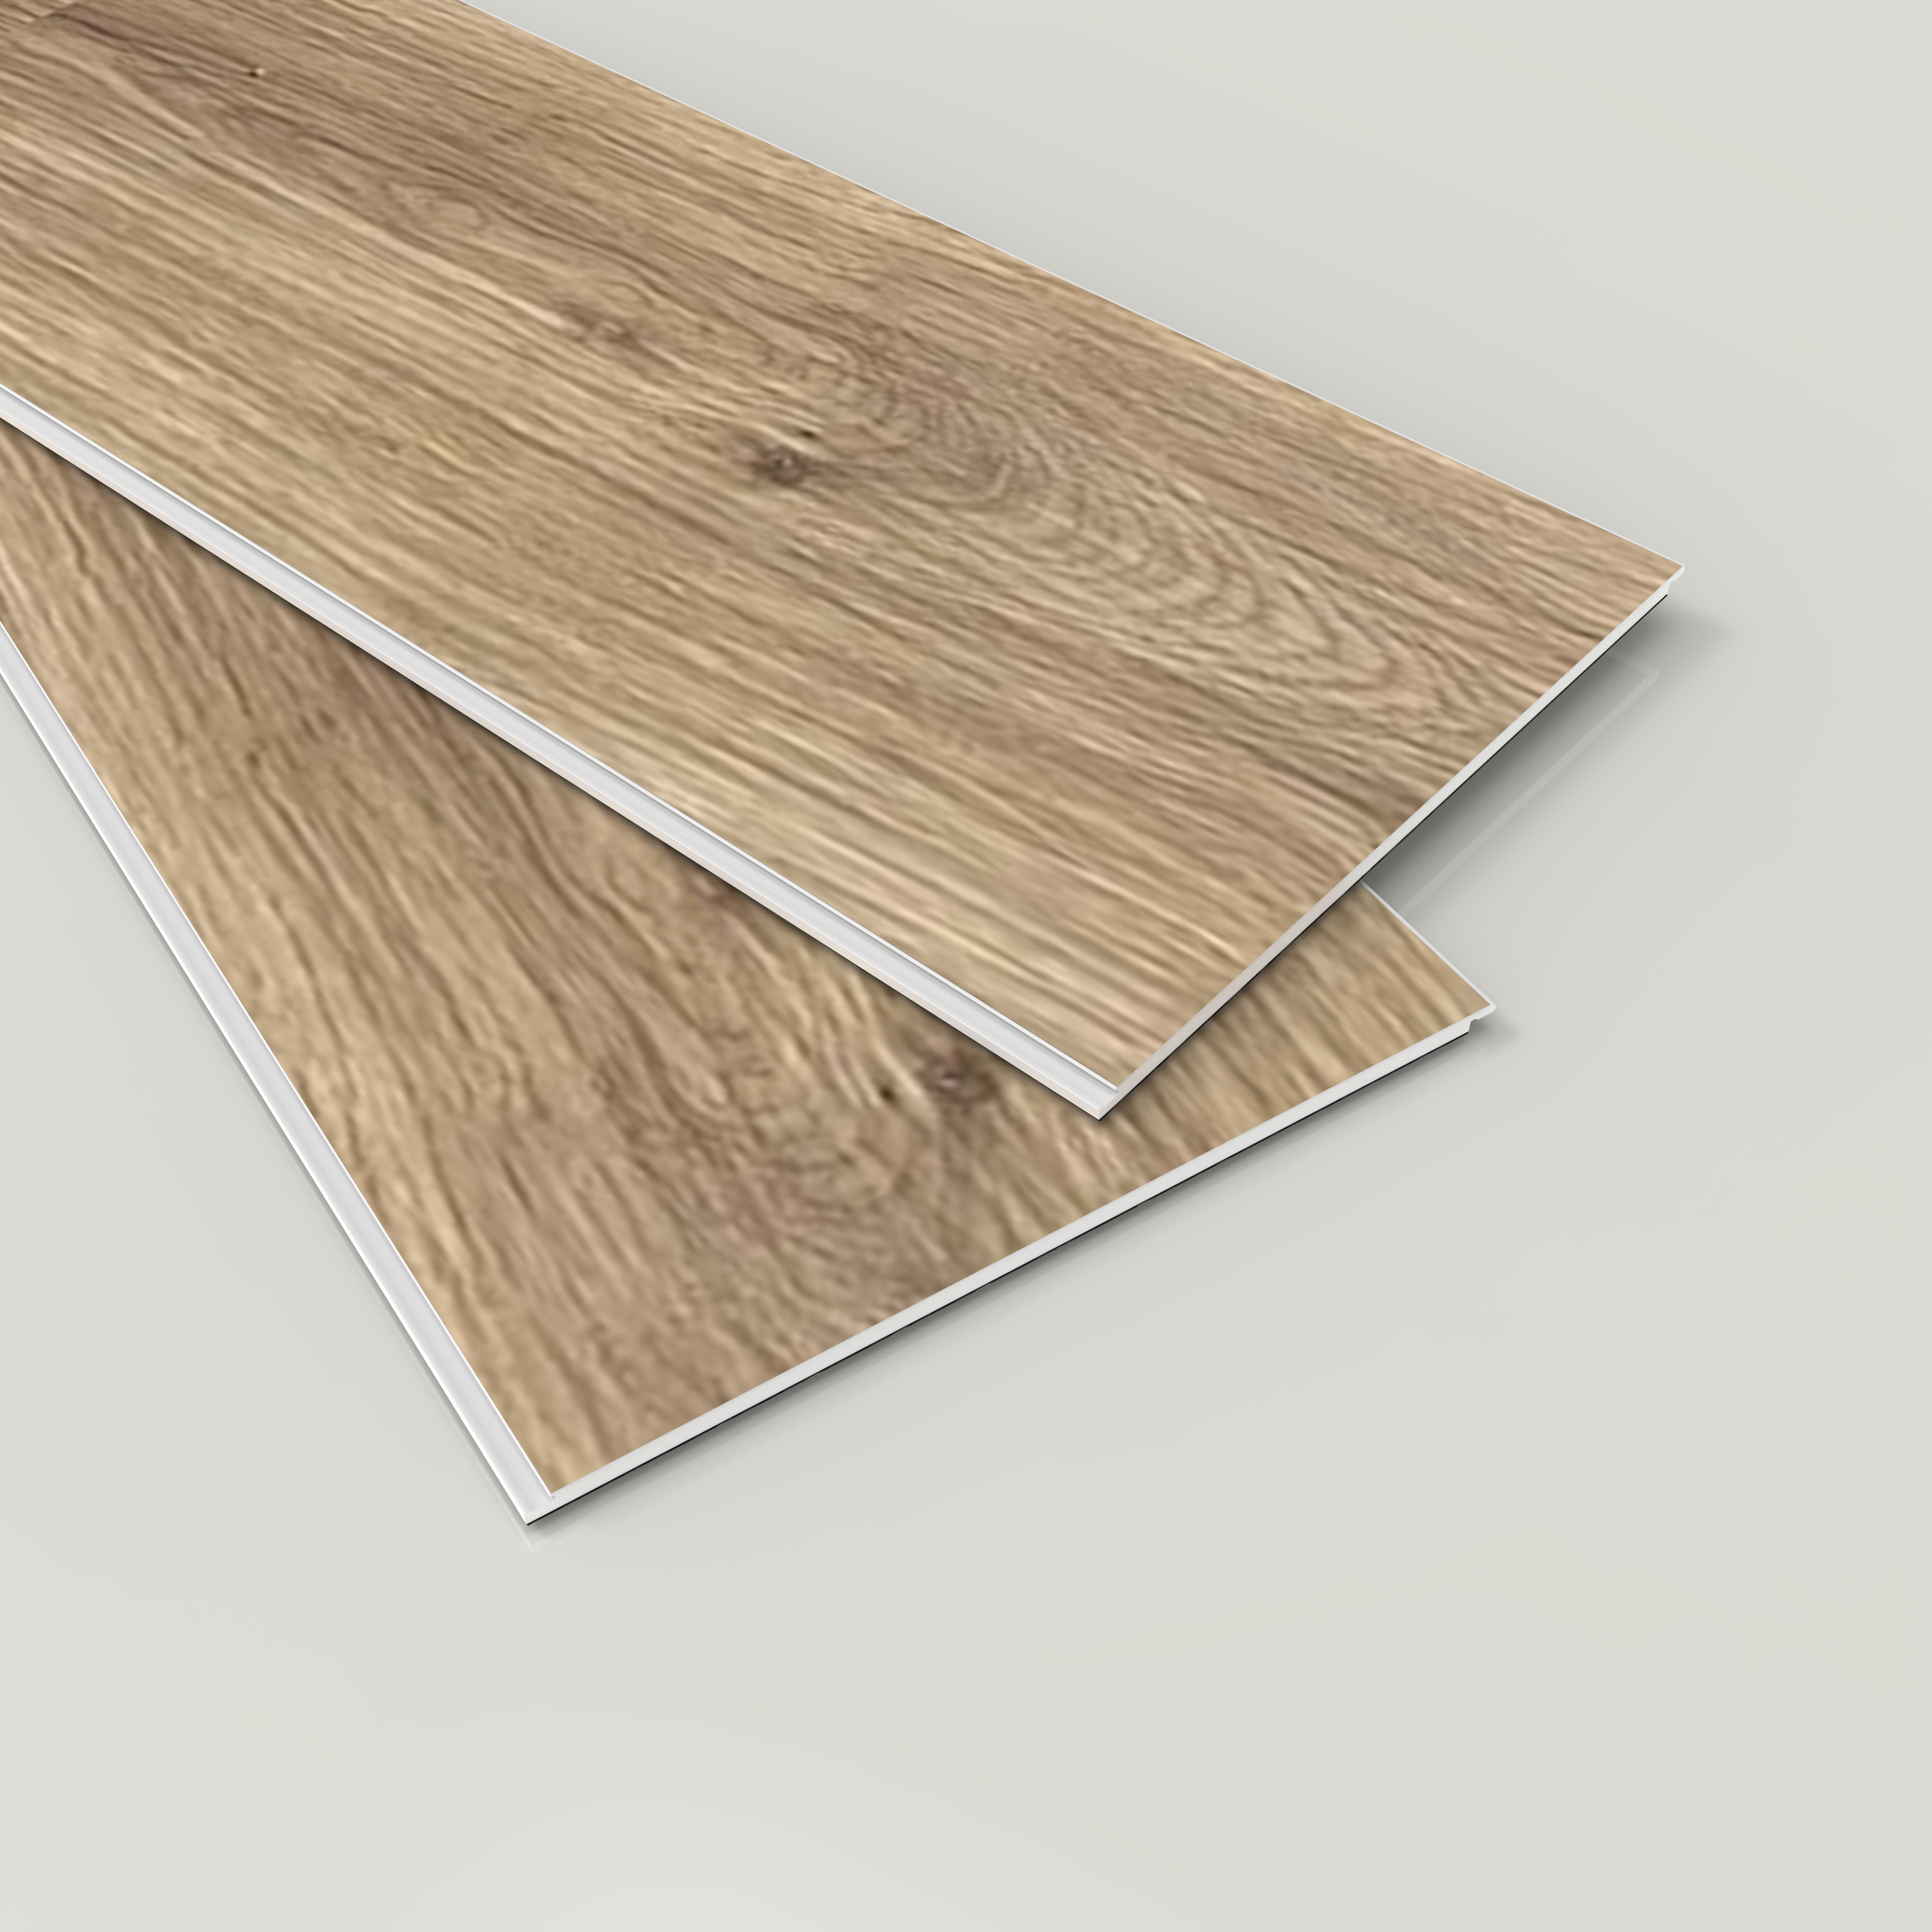 SPC Rigid Core Plank Chestnut Flooring, 7" x 48" x 6mm, 22 mil Wear Layer